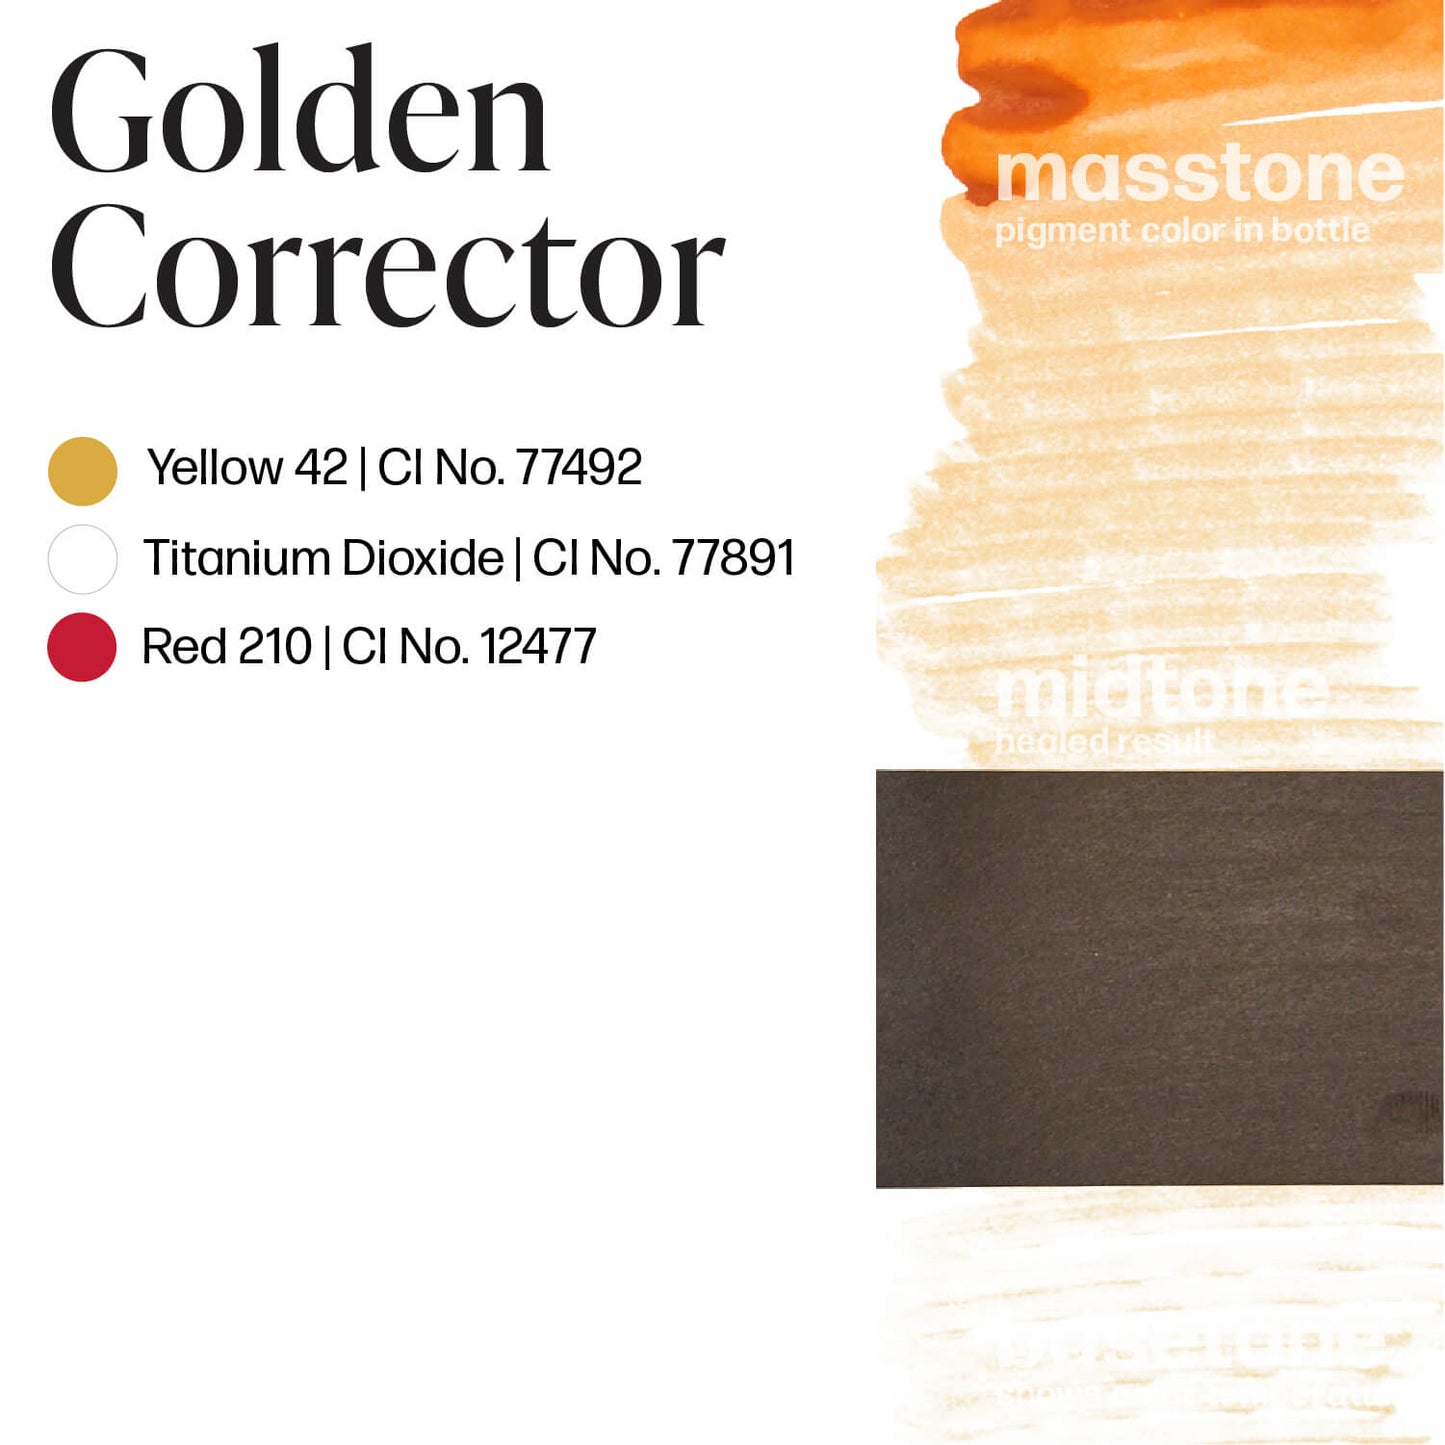 Perma Blend Golden Corrector Drawdown Masstone Midtone Basetone